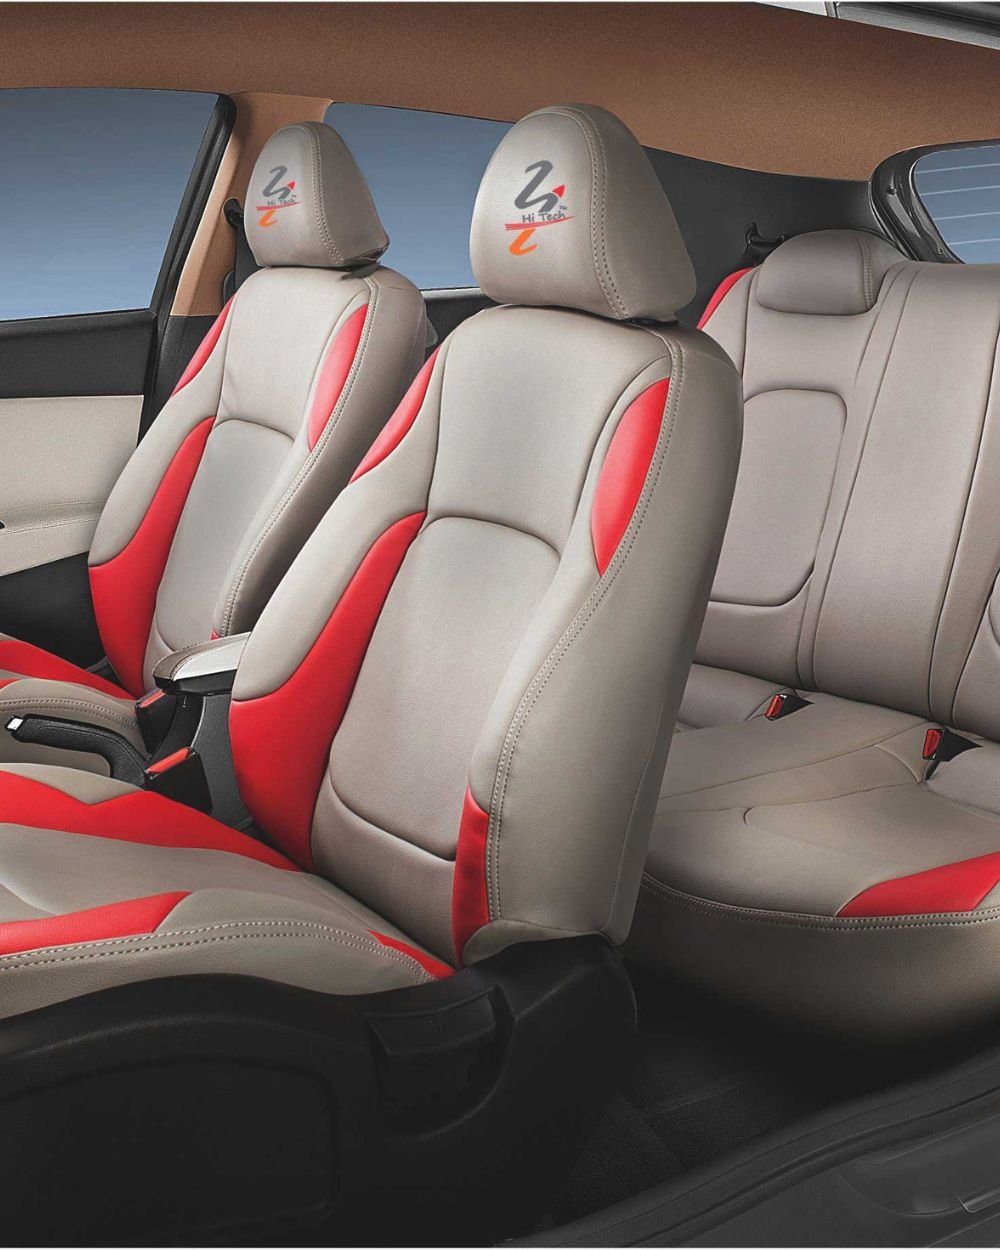 Riser Hi-Tech Car Seat Cover India